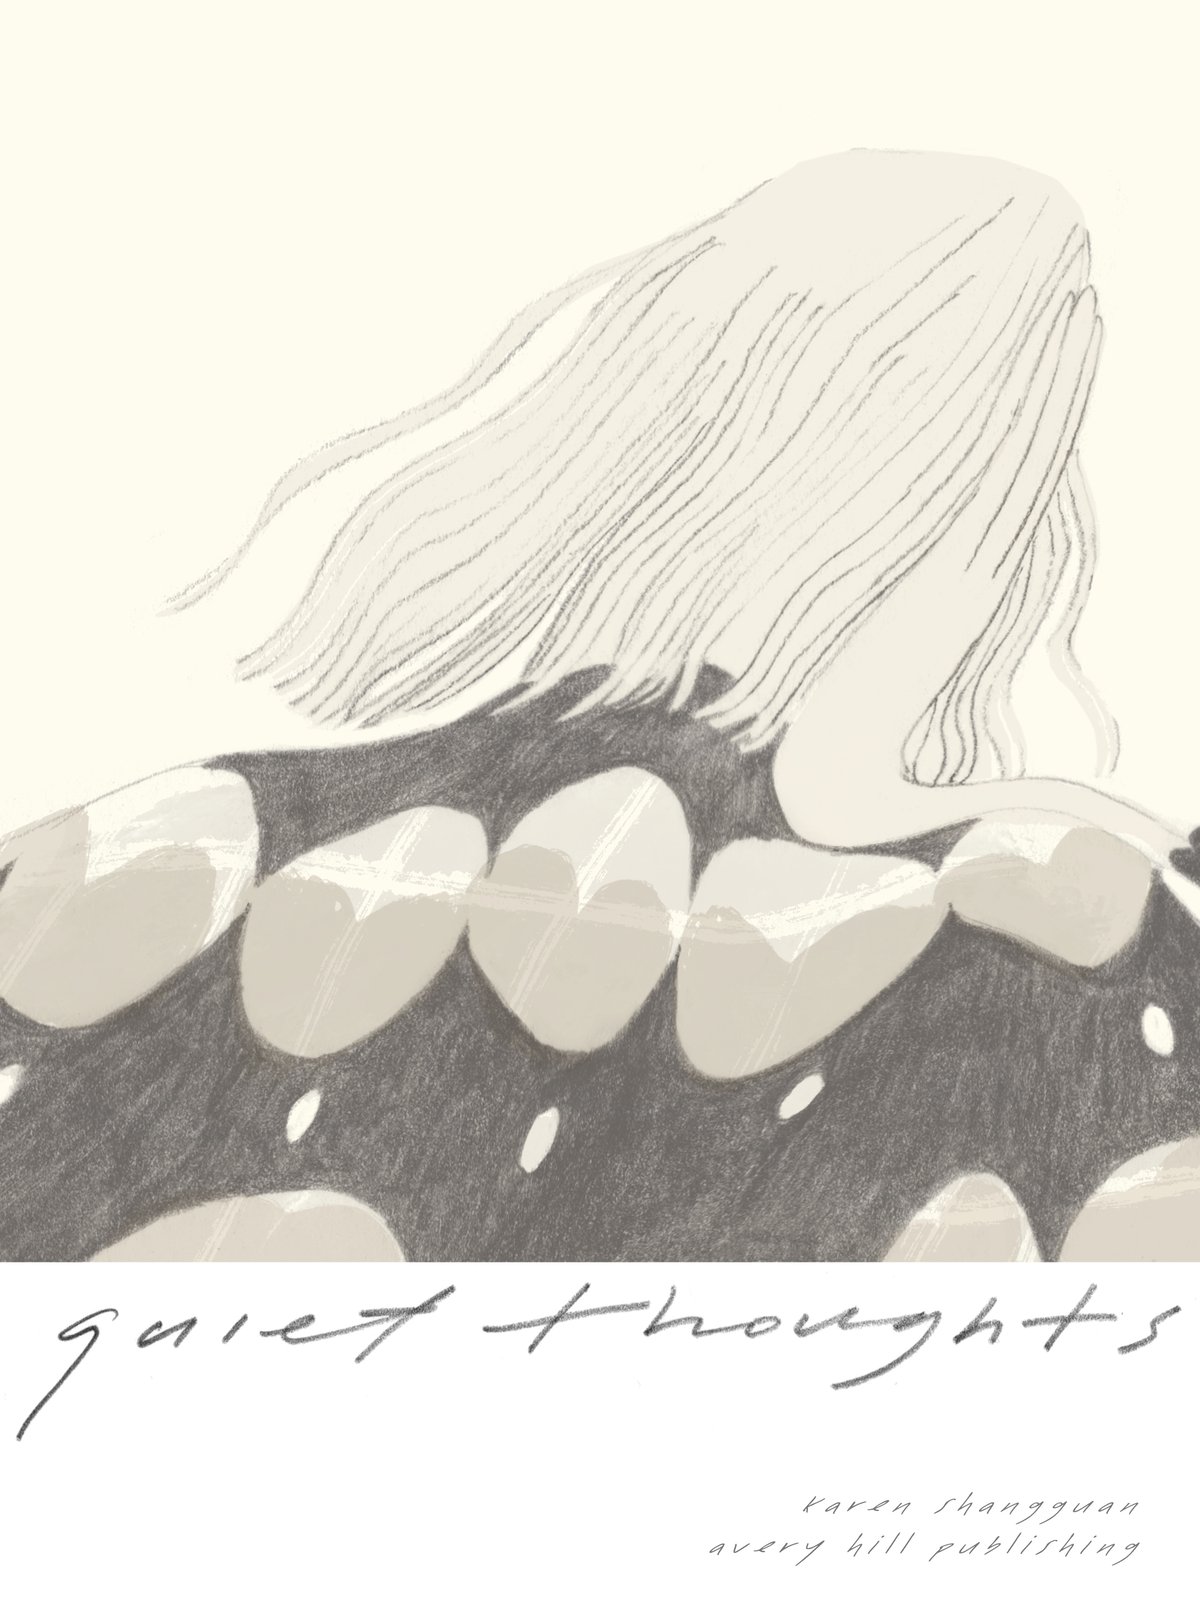 Quiet Thoughts by Karen Shangguan